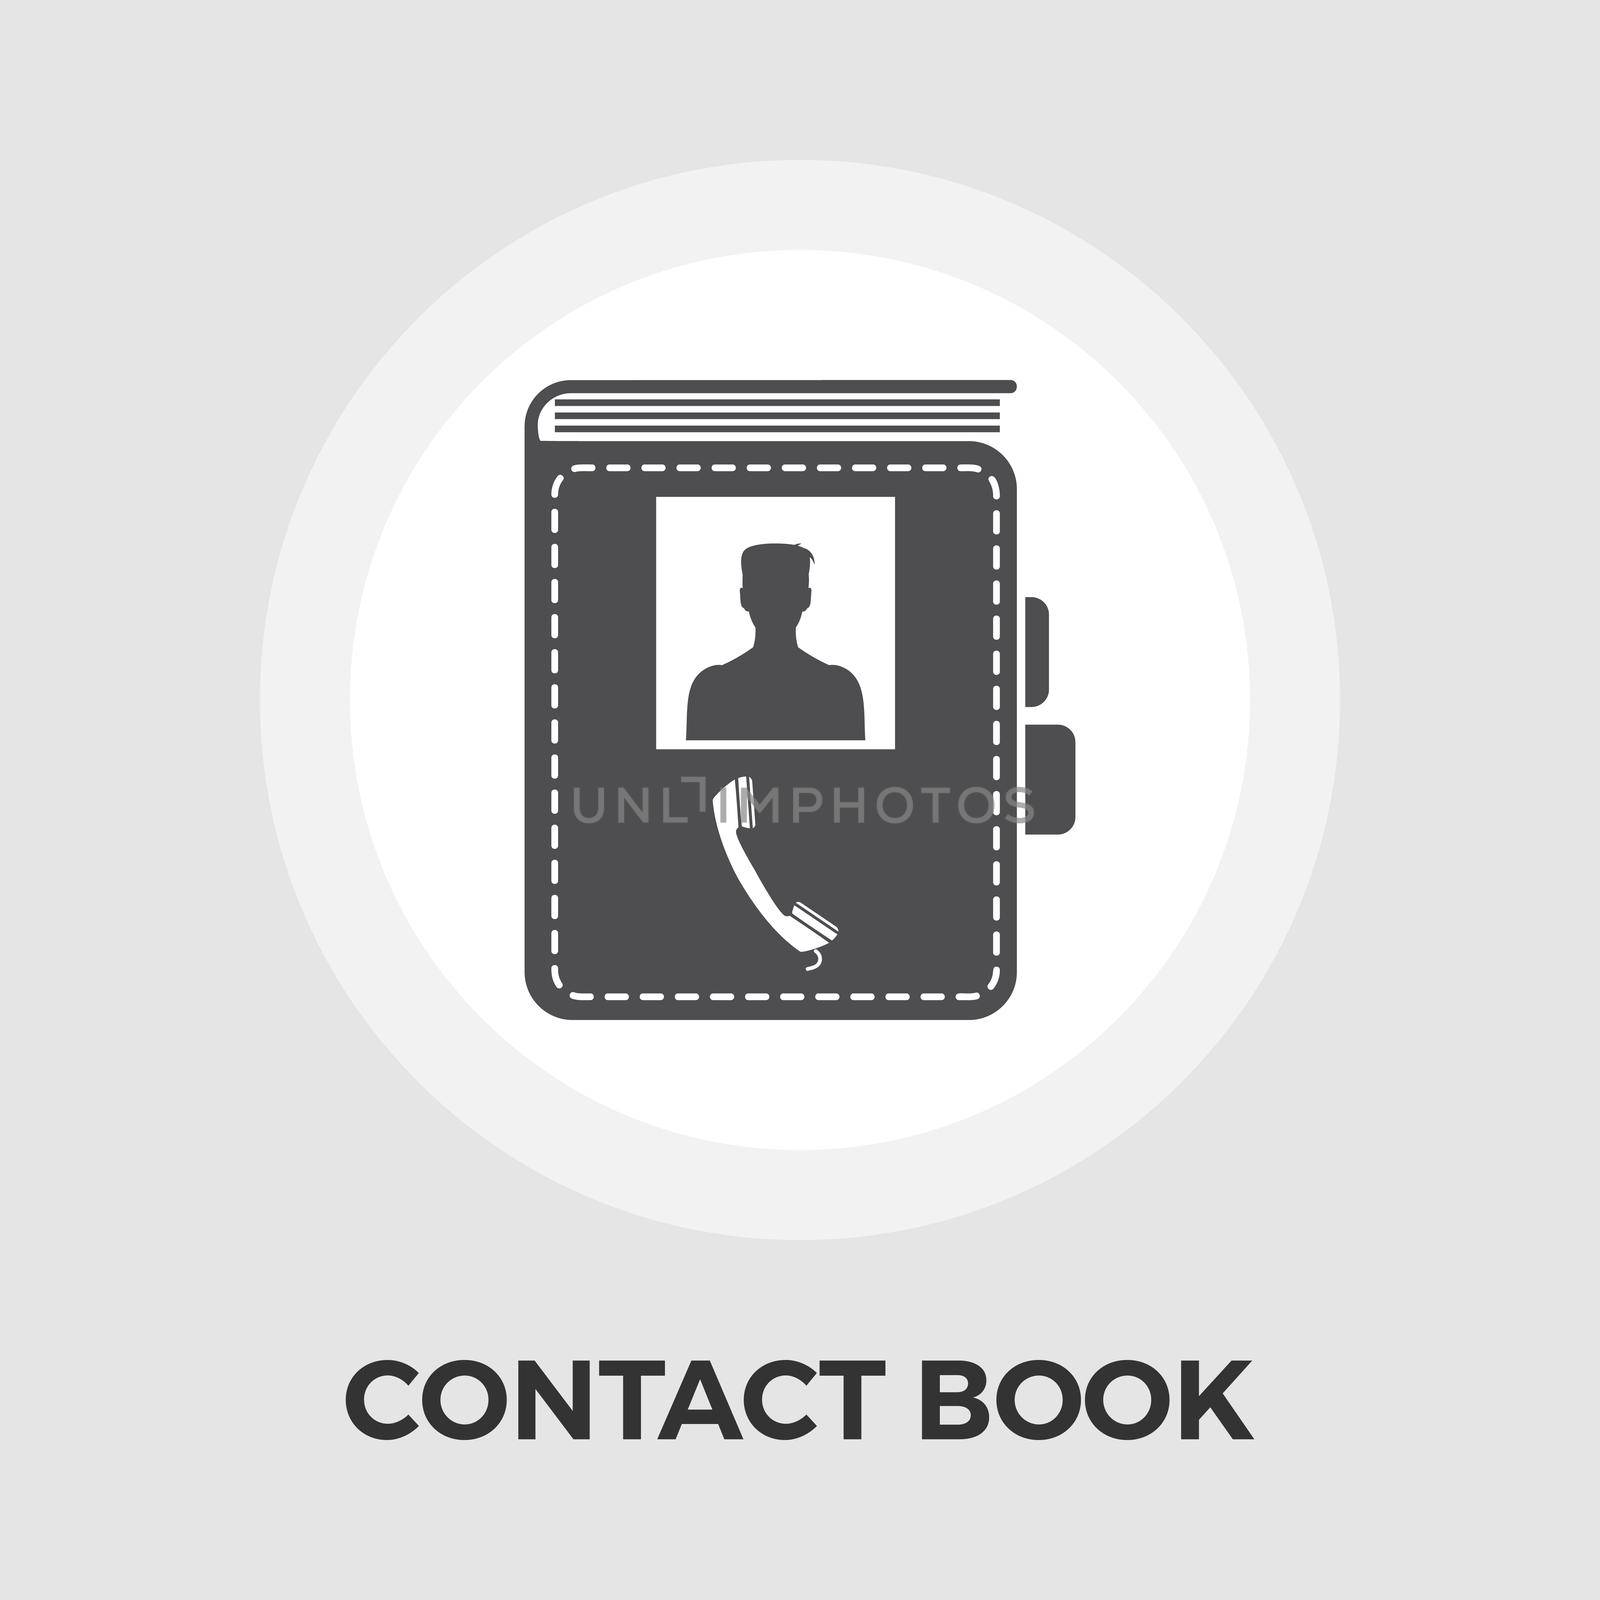 Contact book flat icon by smoki